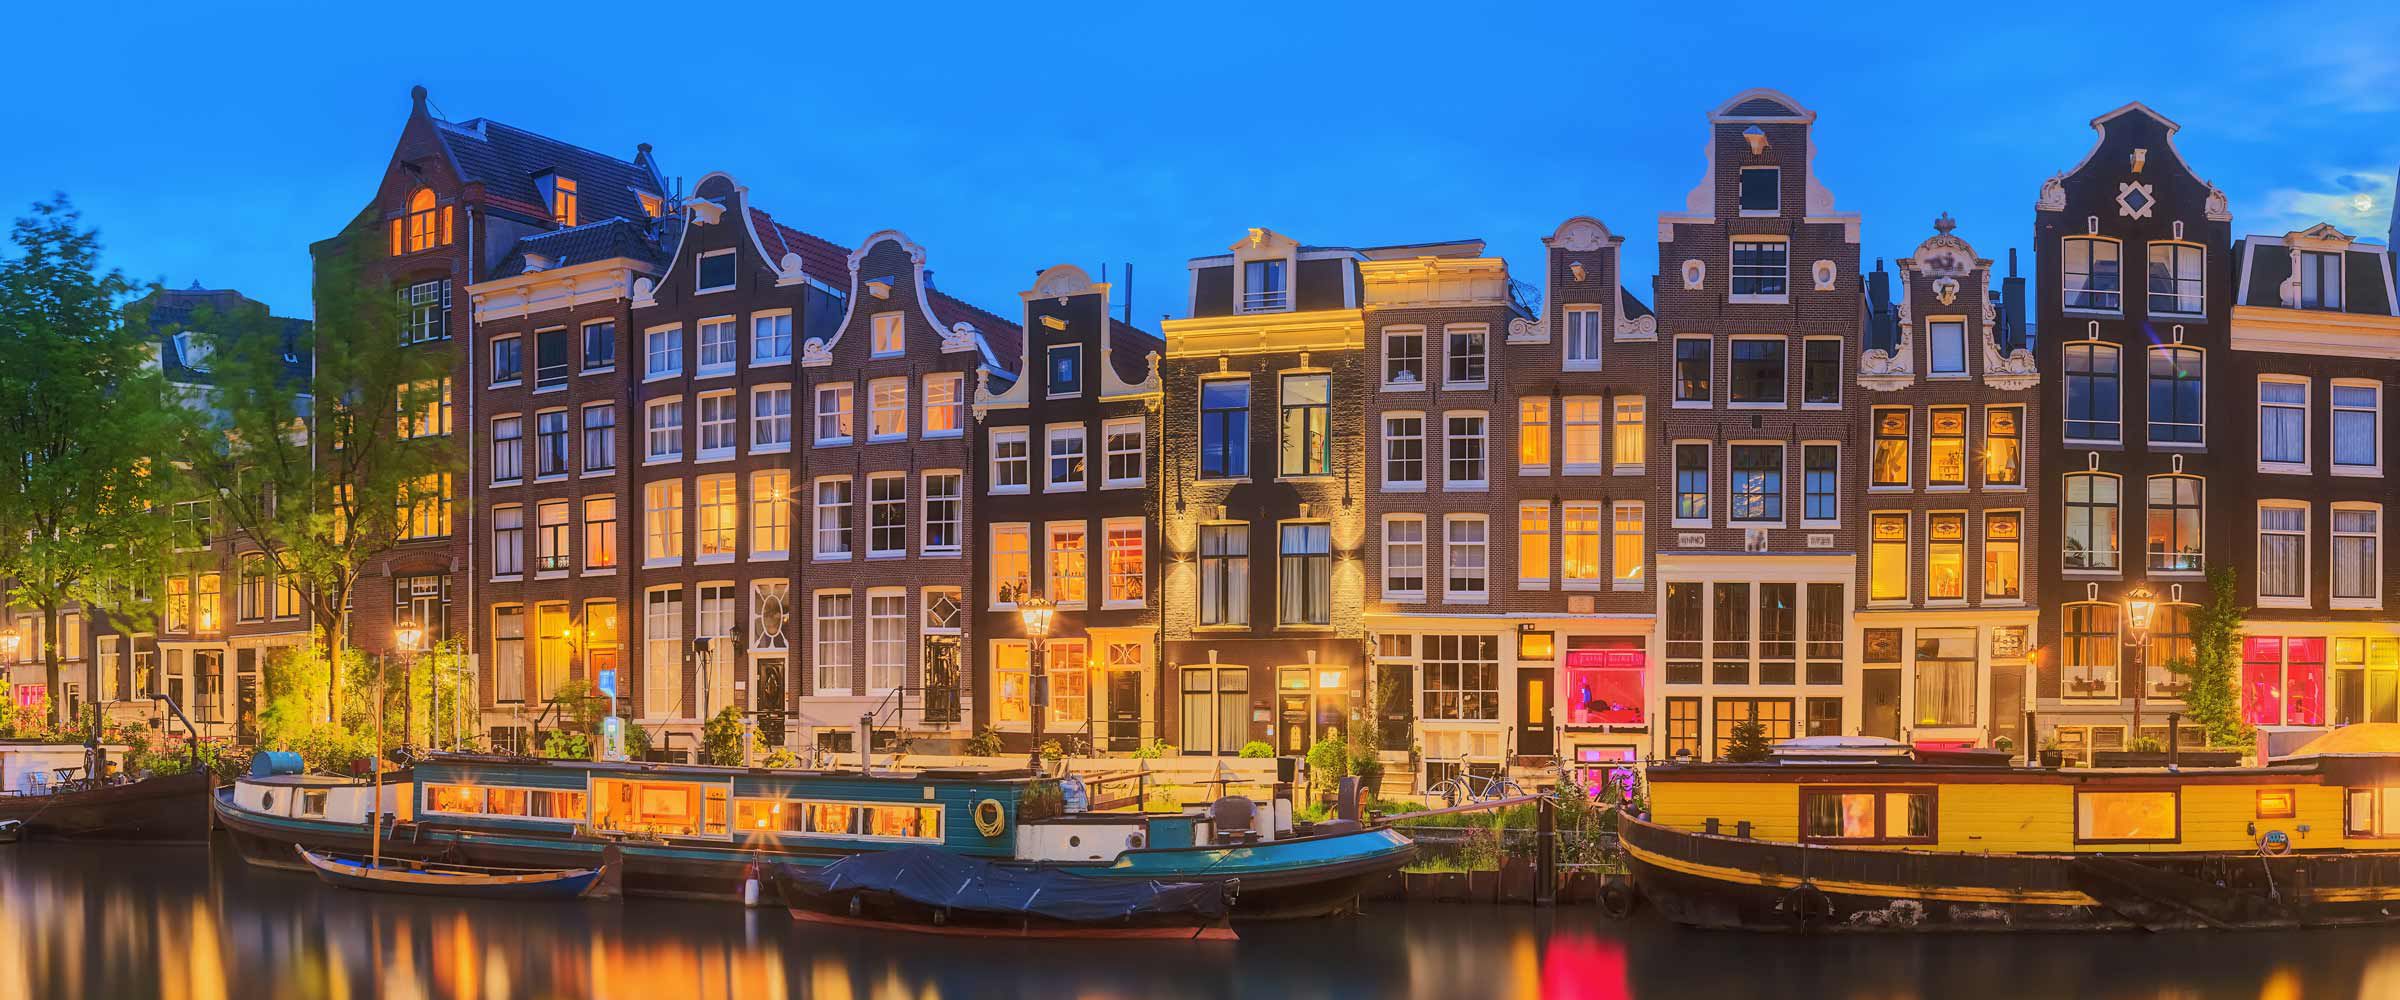 Amazing Amsterdam 